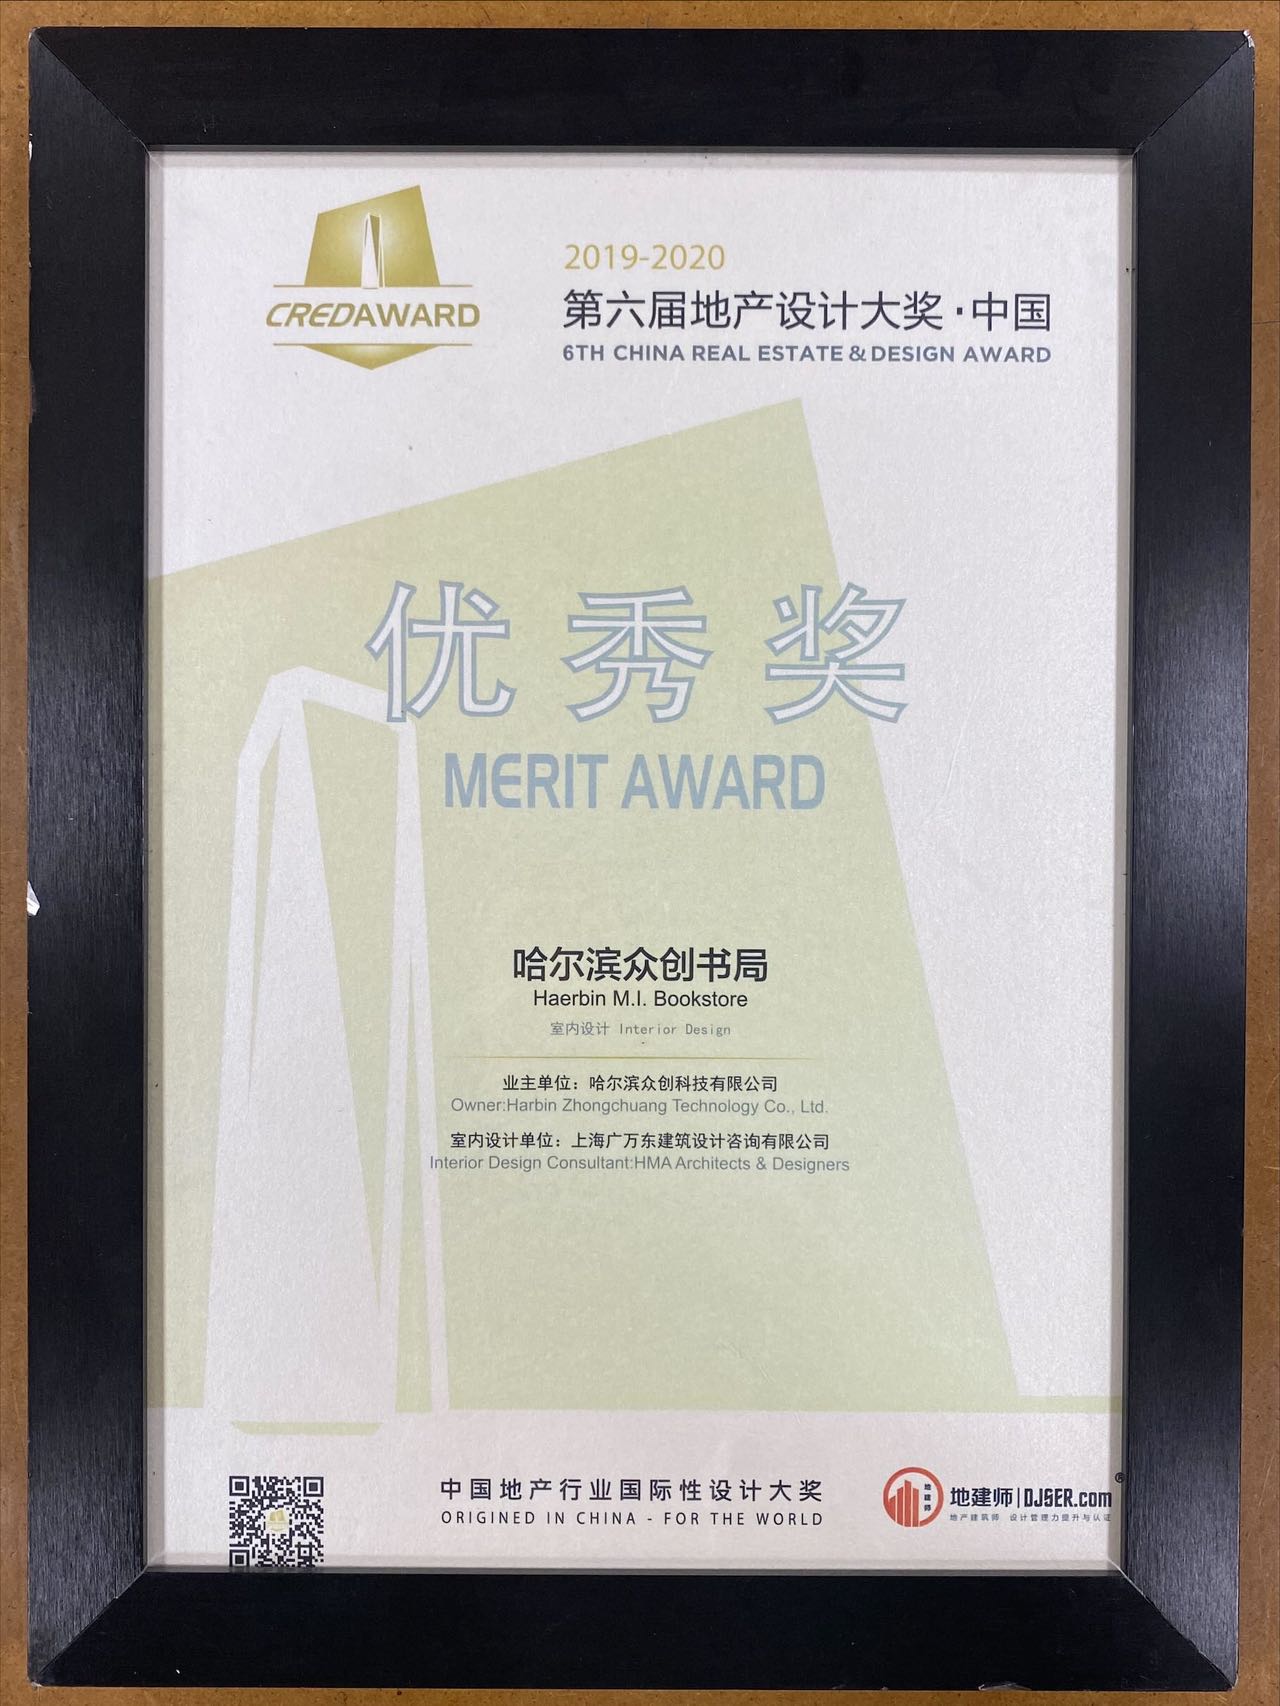 FY 2019-2020 Merit Award, China Estate & Design Award